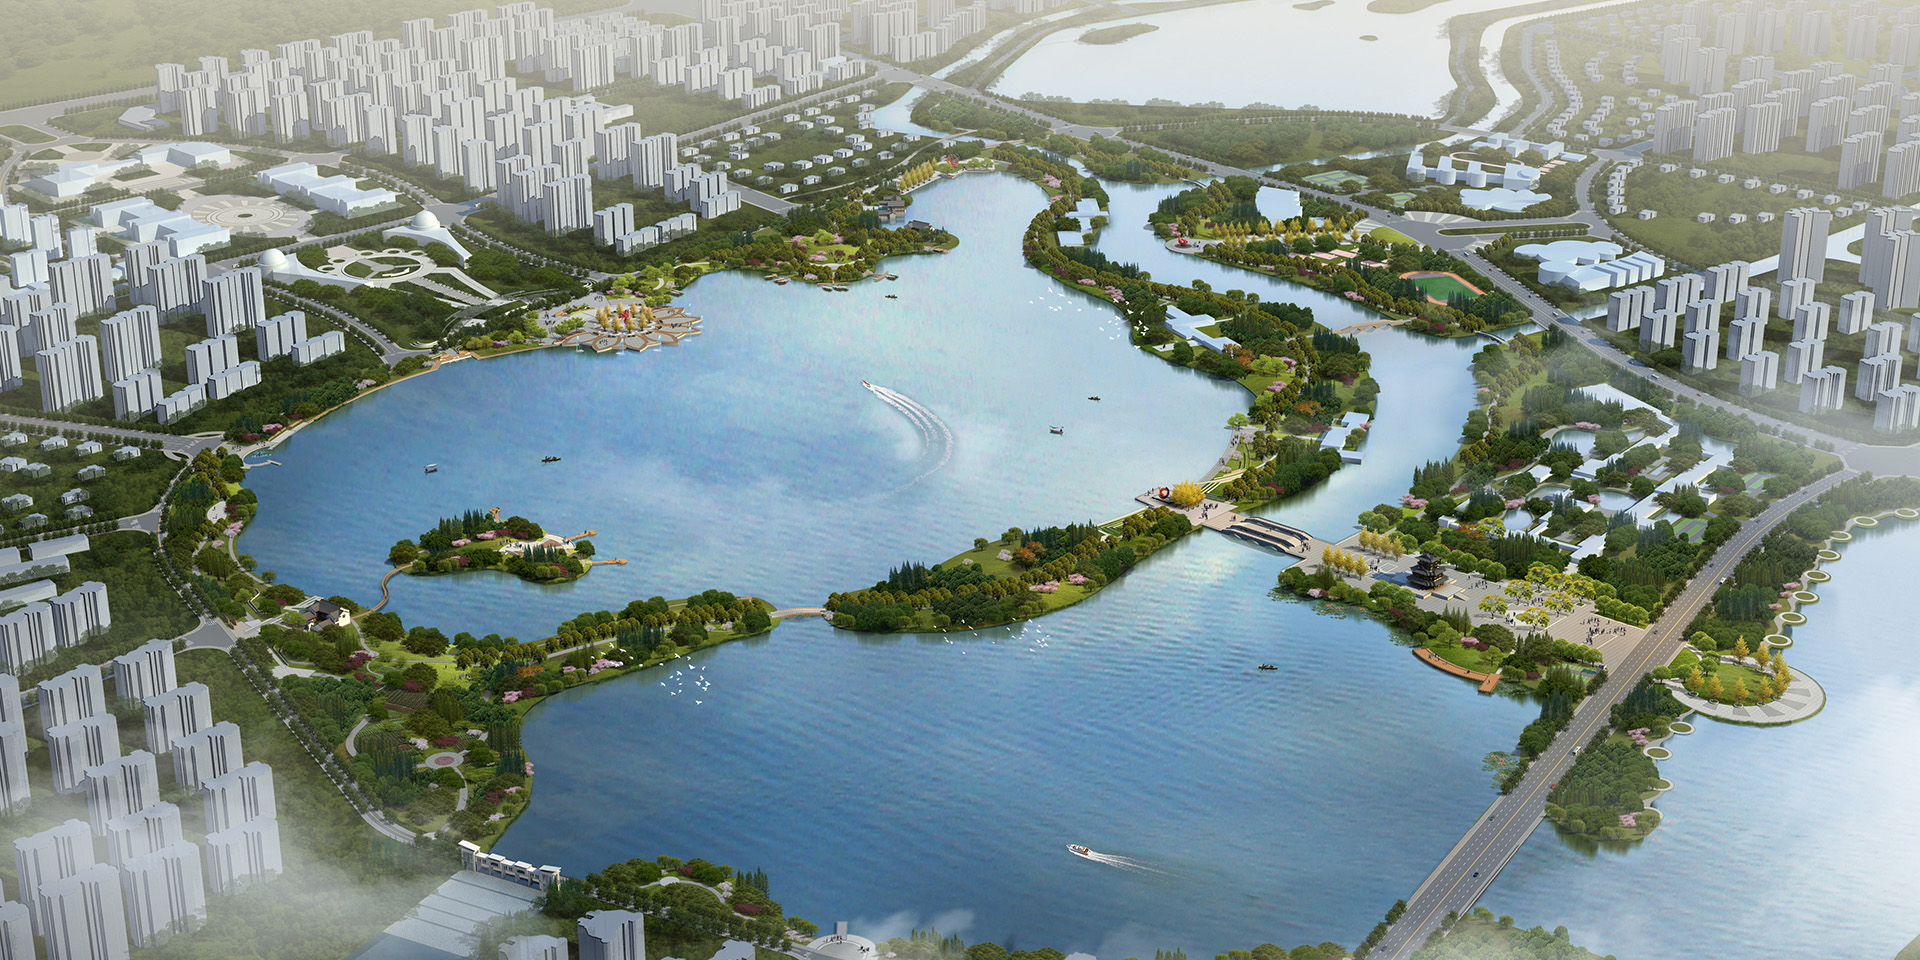 Landscape Design Around The Yuyang Lake In Sanhu New District